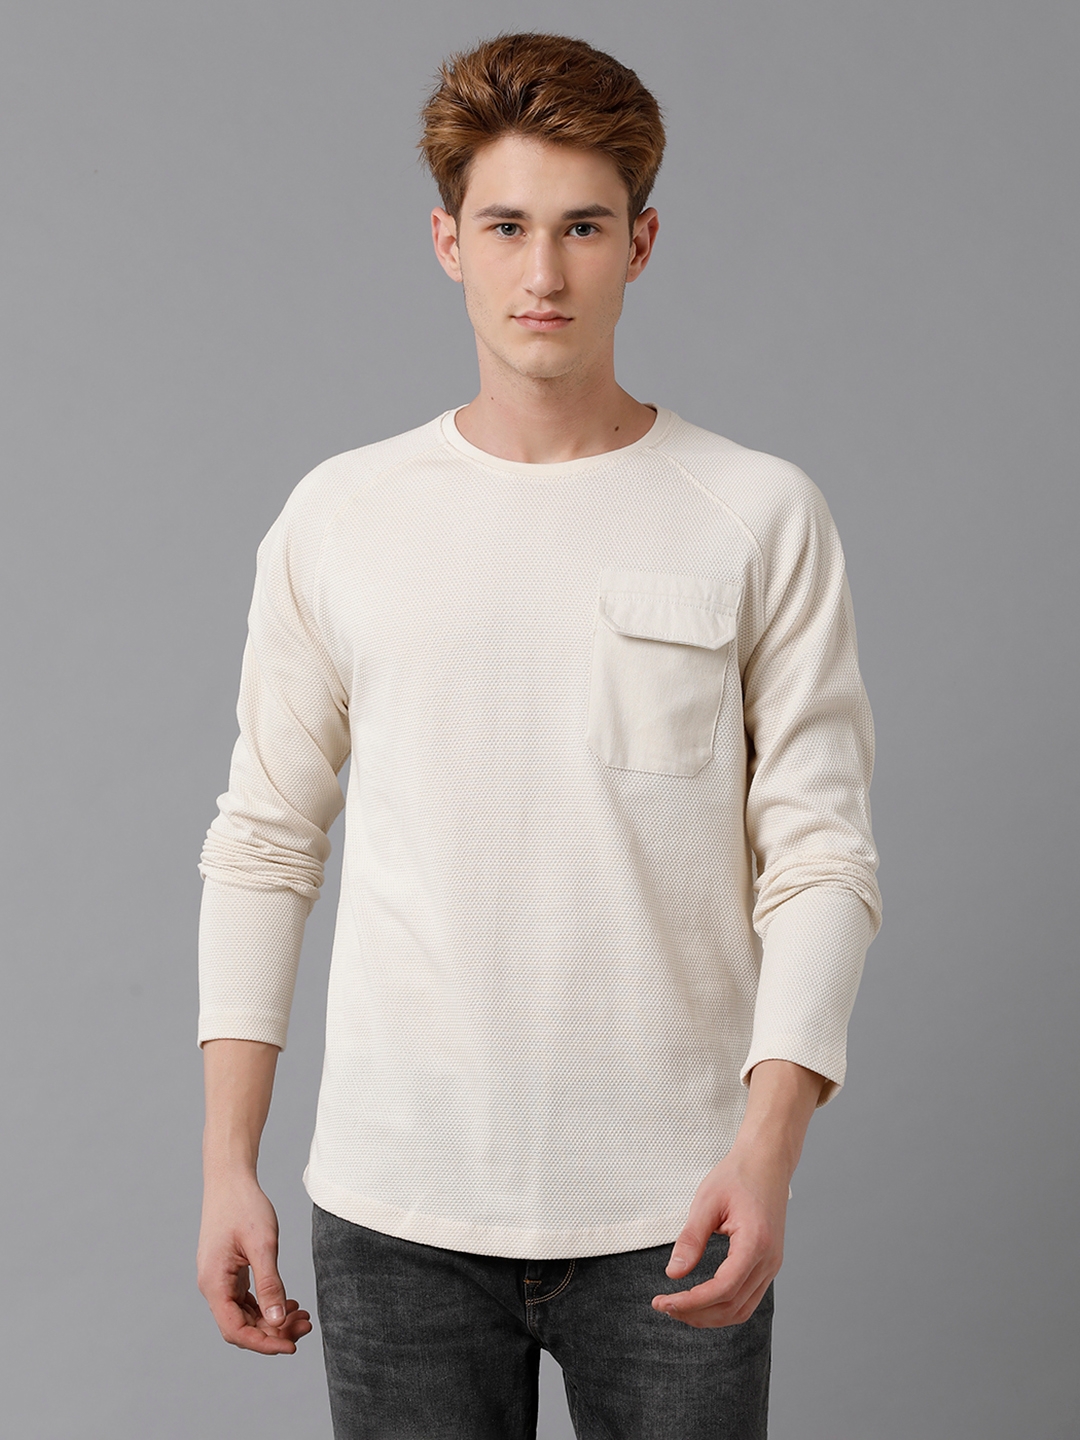 VOI JEANS Men's Self Textured Off-White Cotton Blend Full Sleeved T-Shirt